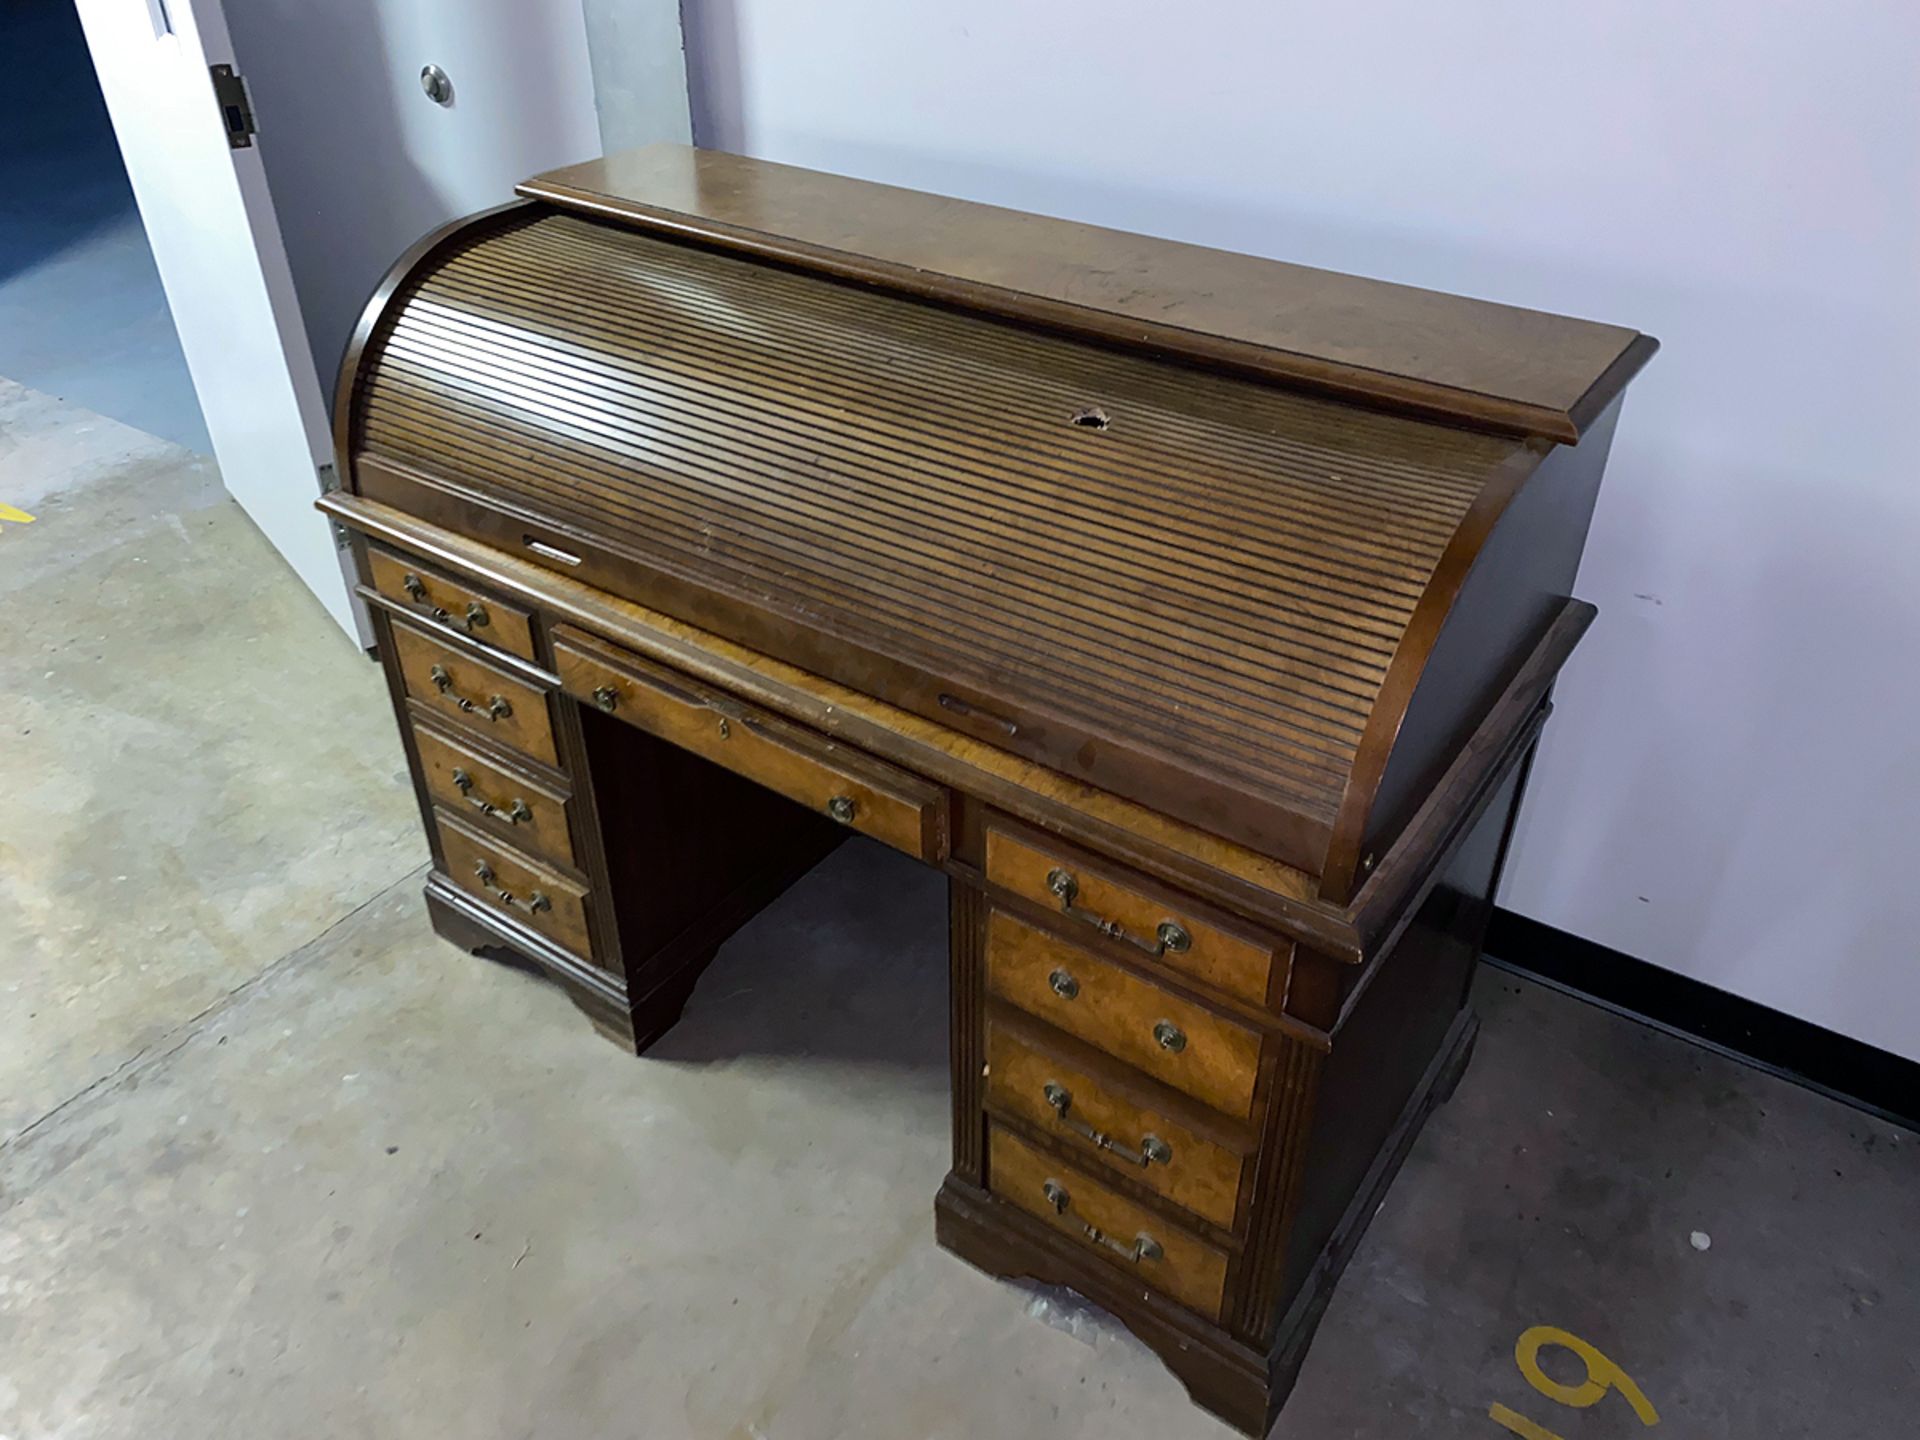 Vintage Jasper Cabinet Company Roll Top Secretary Desk - Image 4 of 12